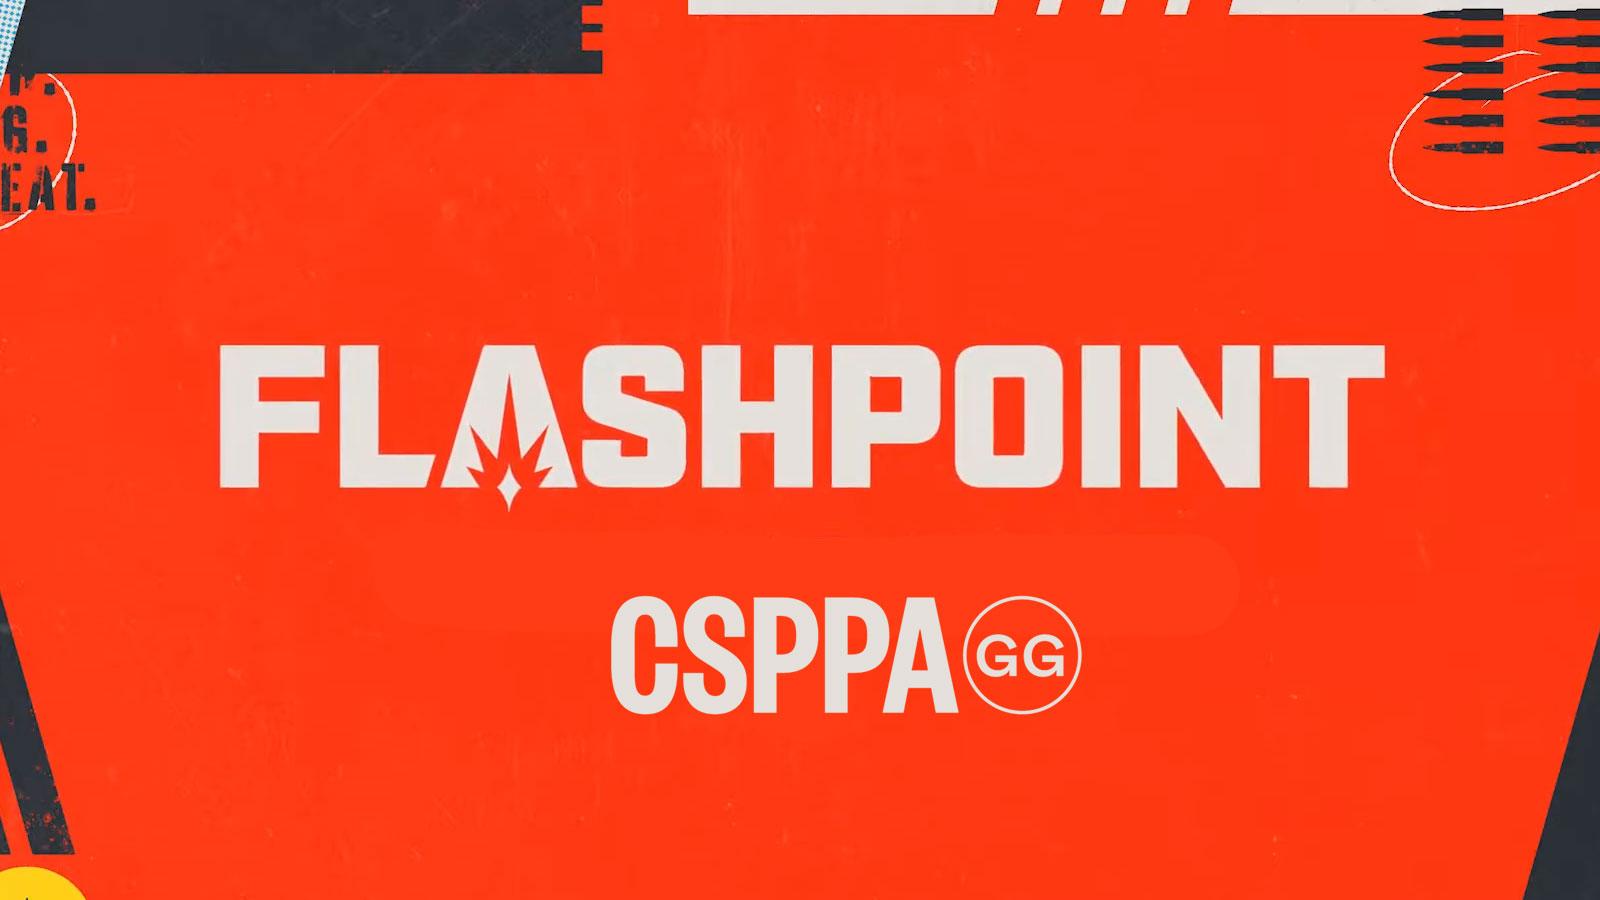 csgo flashpoint csppa